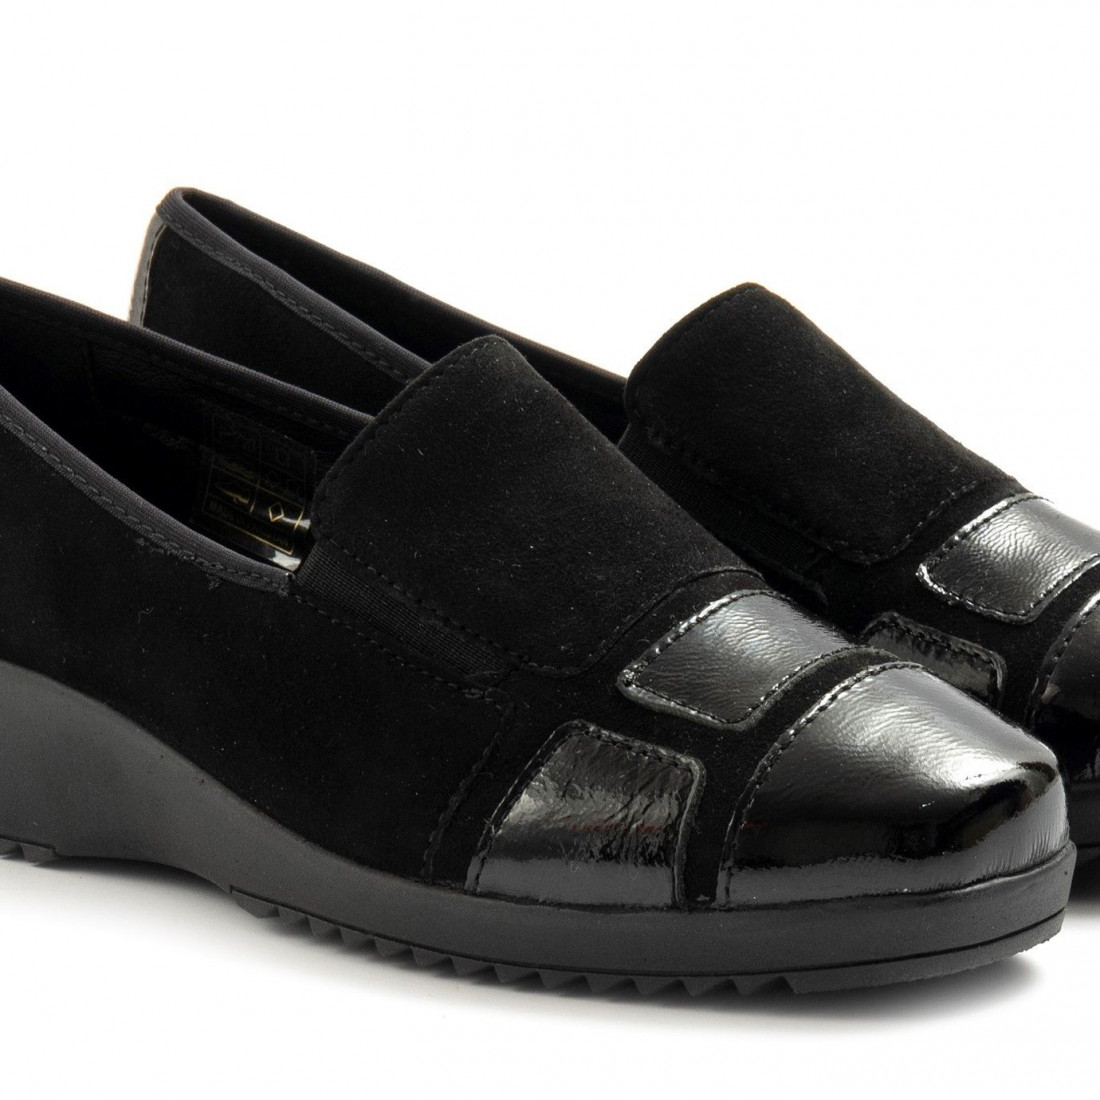 Cinzia Sopt scarpa donna nera in suede con zeppa bassa